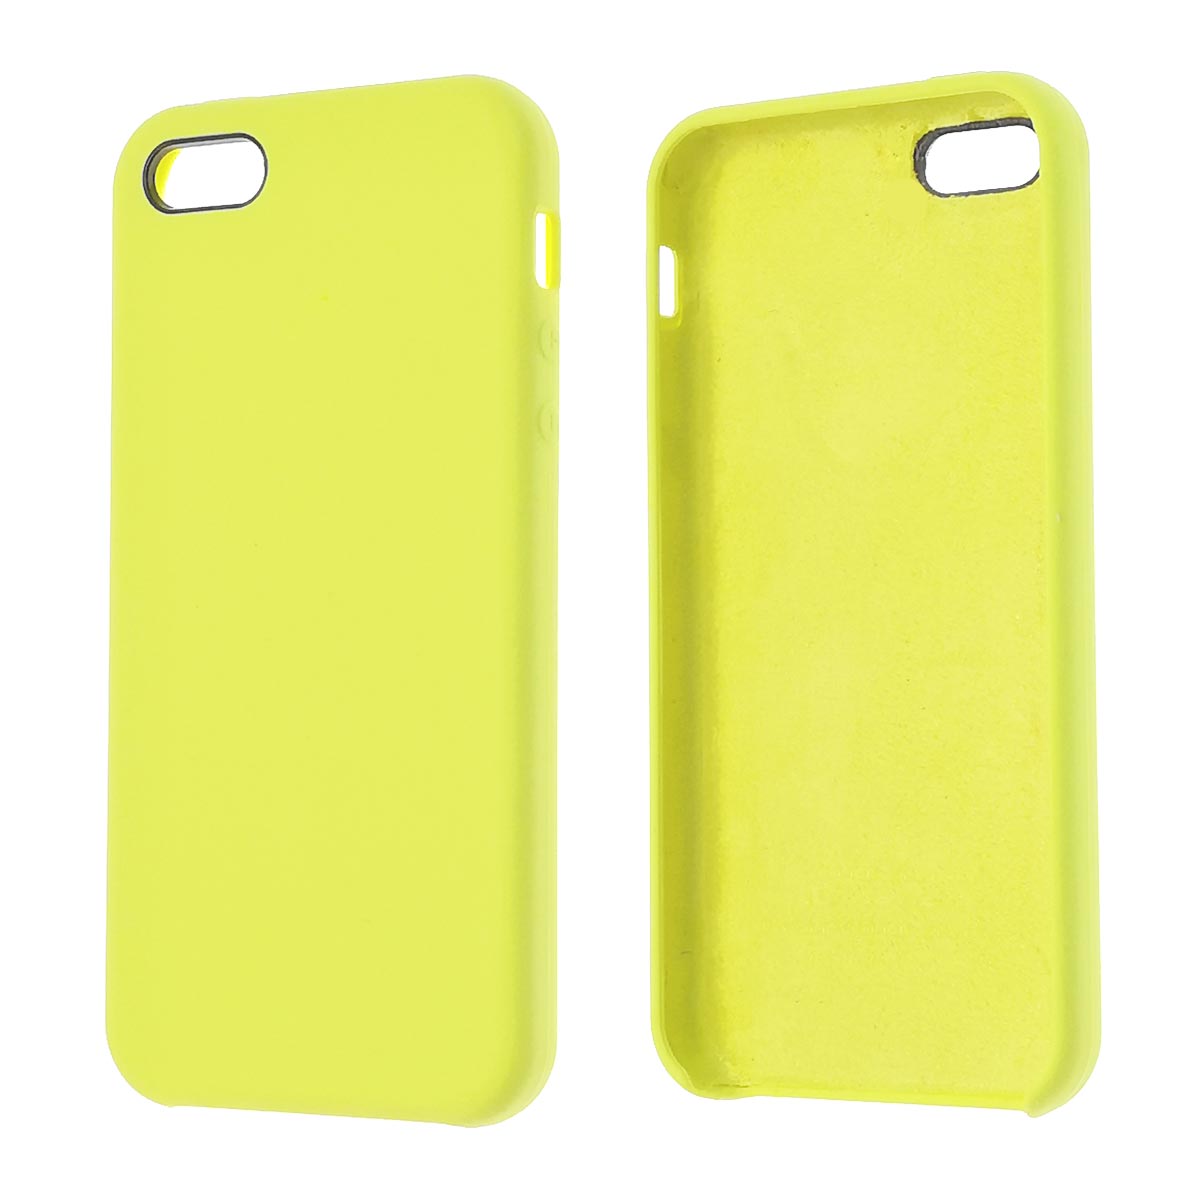 Чехол накладка Silicon Case для APPLE iPhone 5, iPhone 5S, iPhone SE, силикон, бархат, цвет ярко желтый